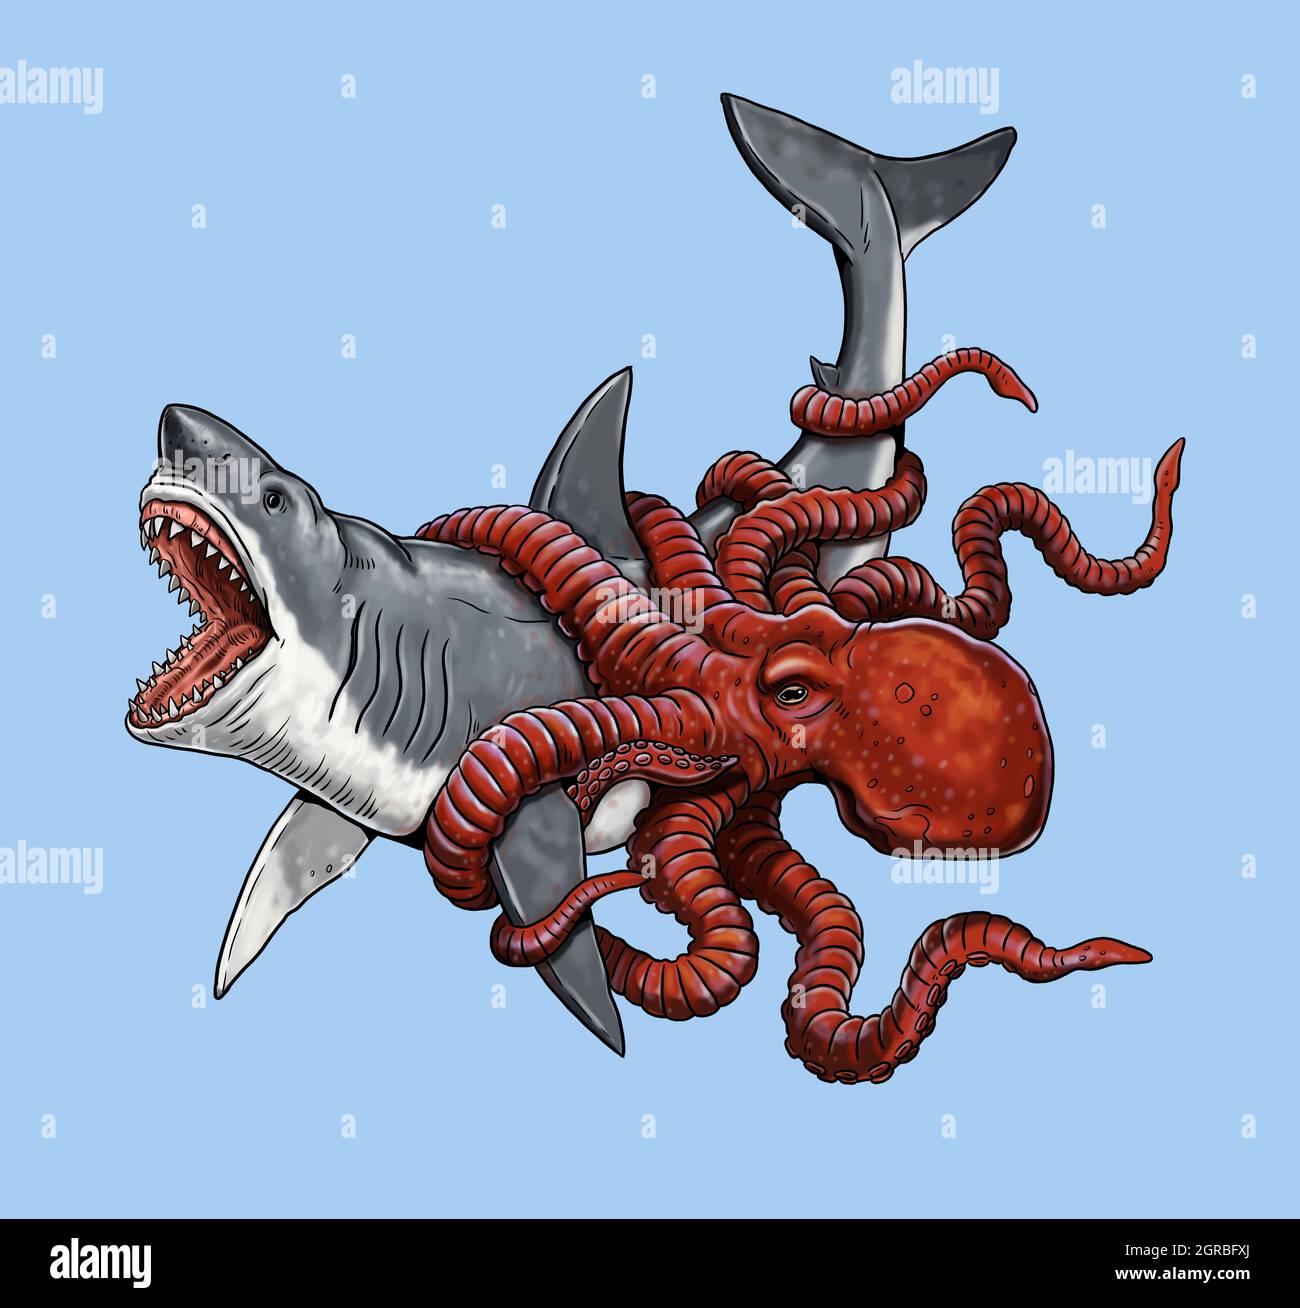 Giant octopus attacks a shark. Battle of the animals illustration Stock  Photo - Alamy